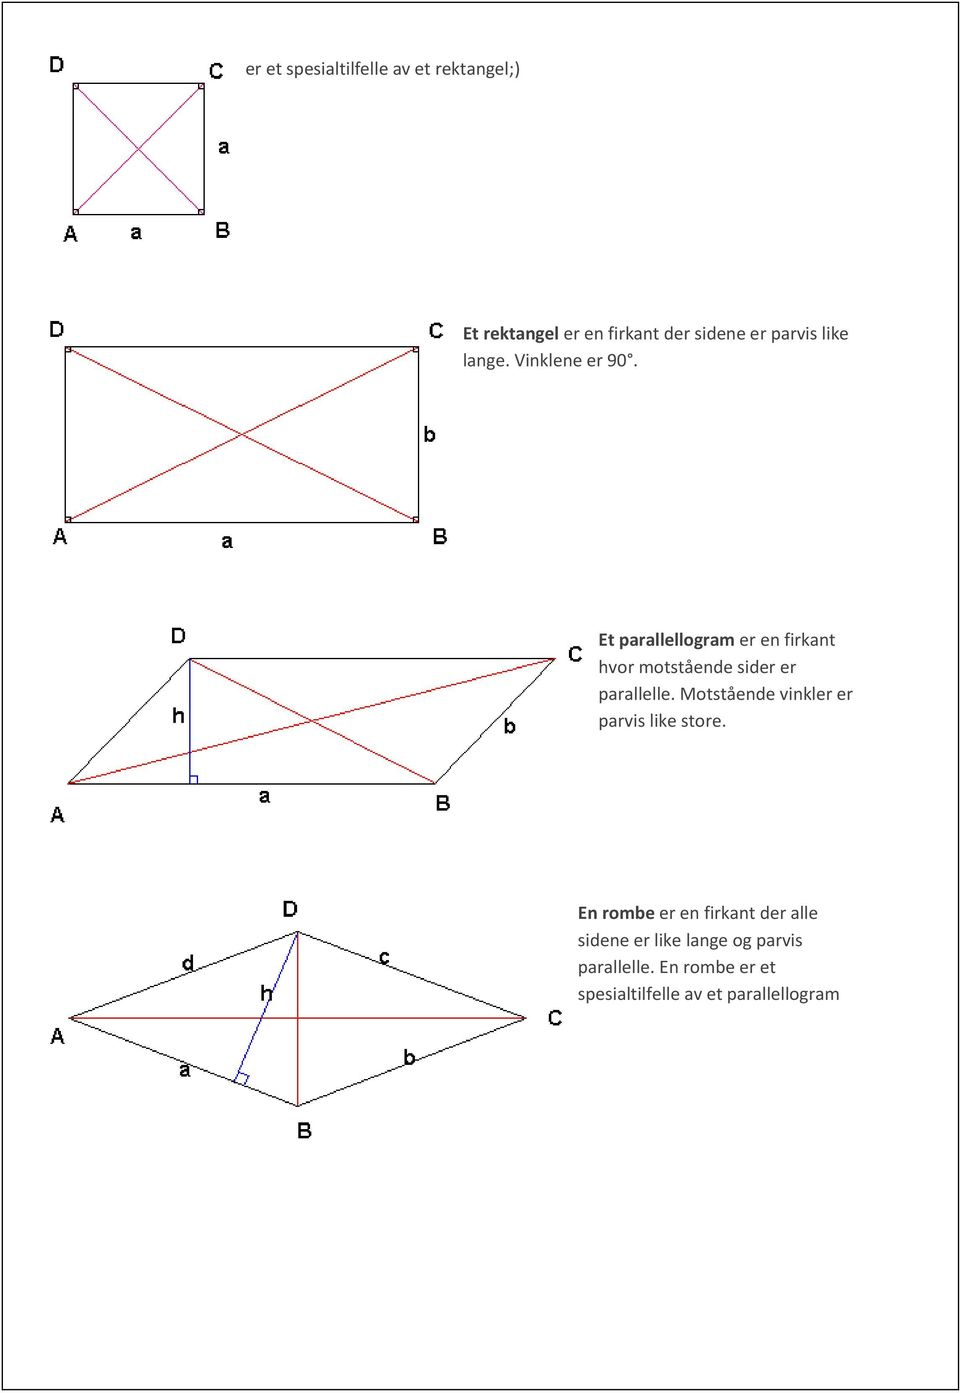 Et parallellogram er en firkant hvor motstående sider er parallelle.